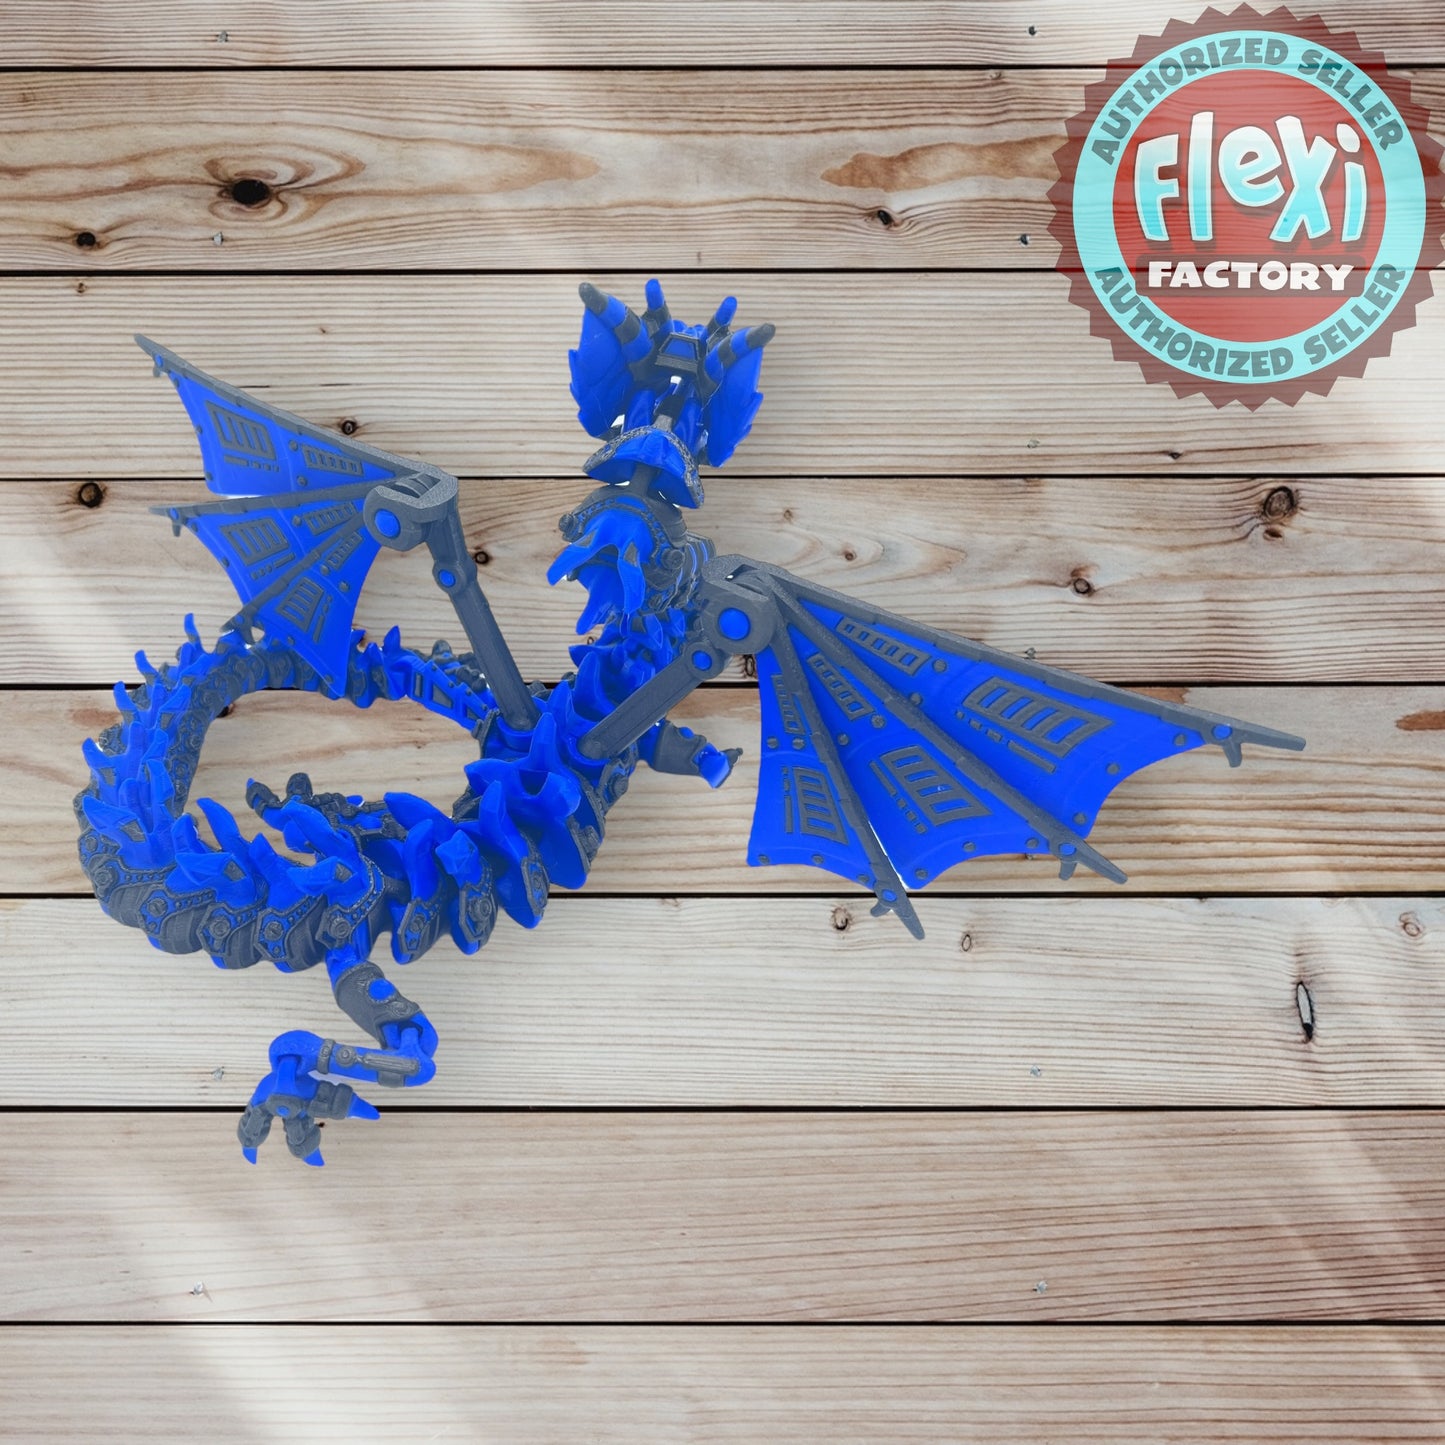 3D Printed Mech Dragon